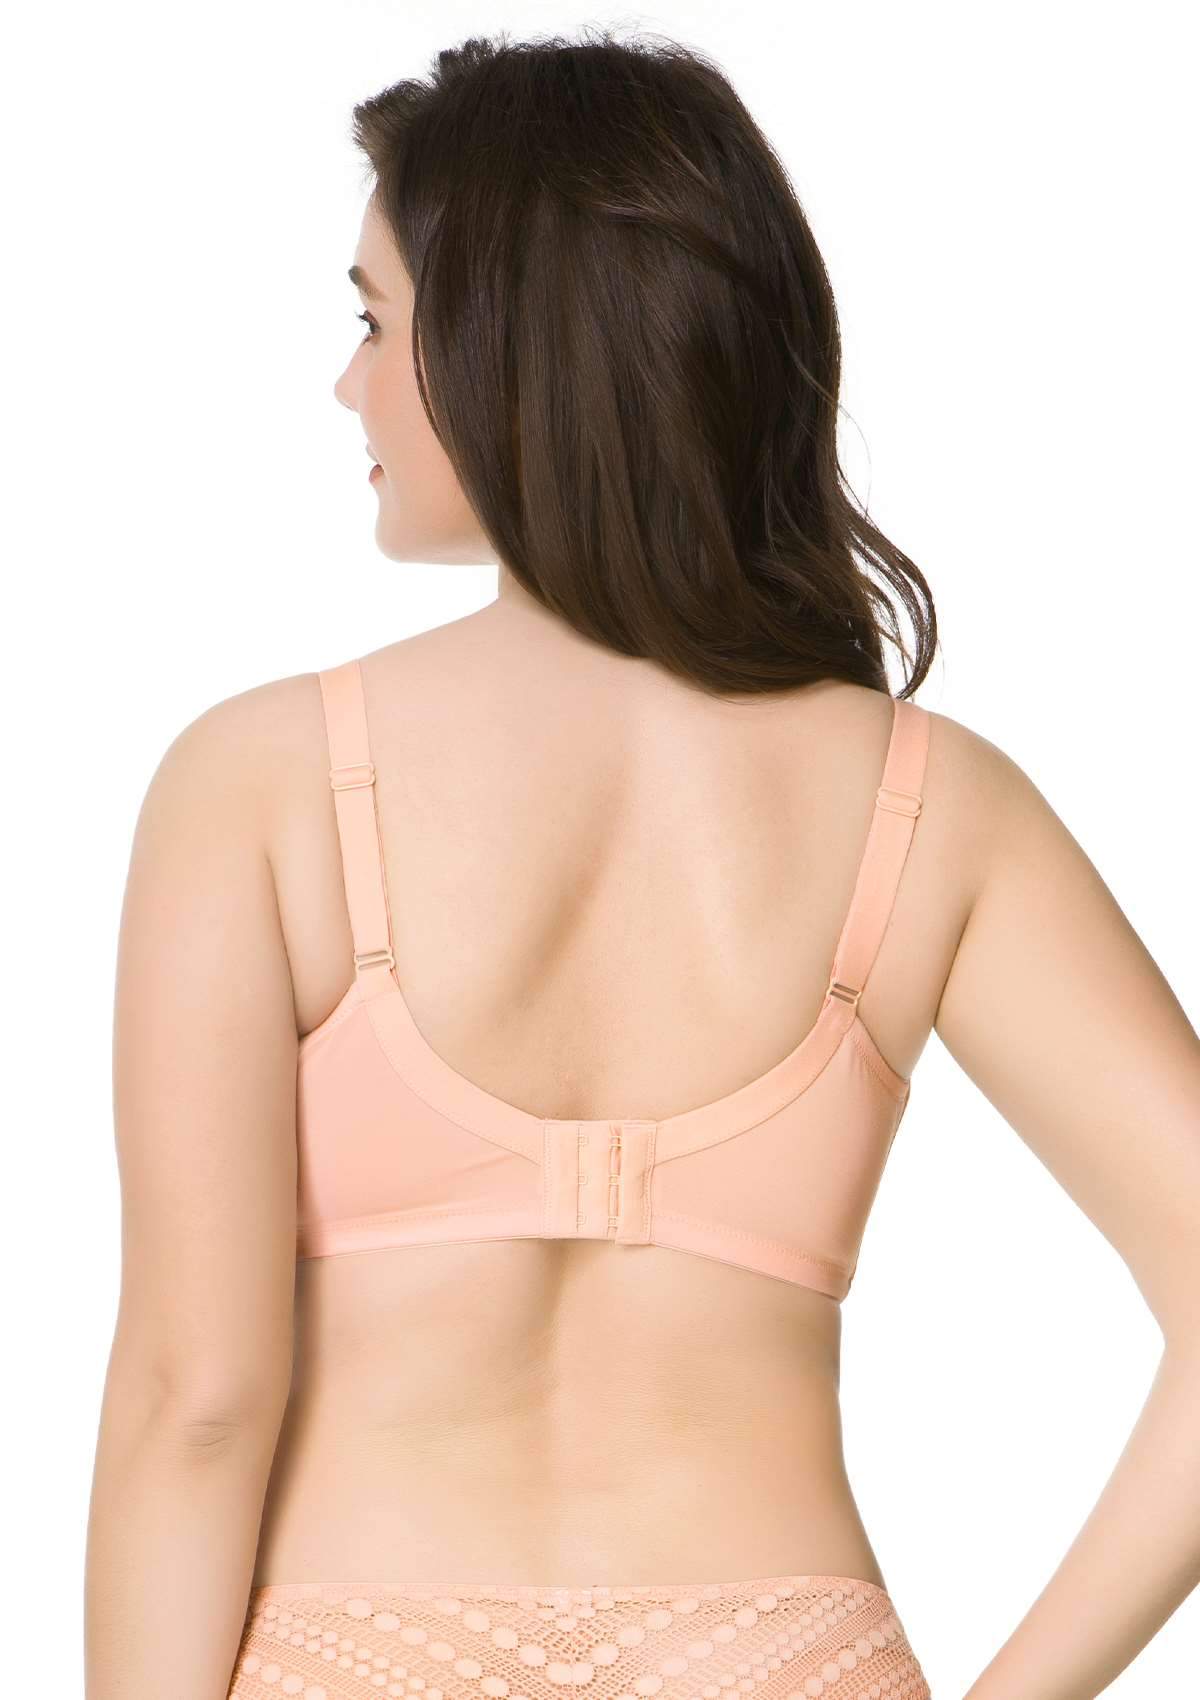 HSIA Heroine Lace Bra And Panty: Best Full Figure Minimizer Bra - Rose Cloud / 38 / C